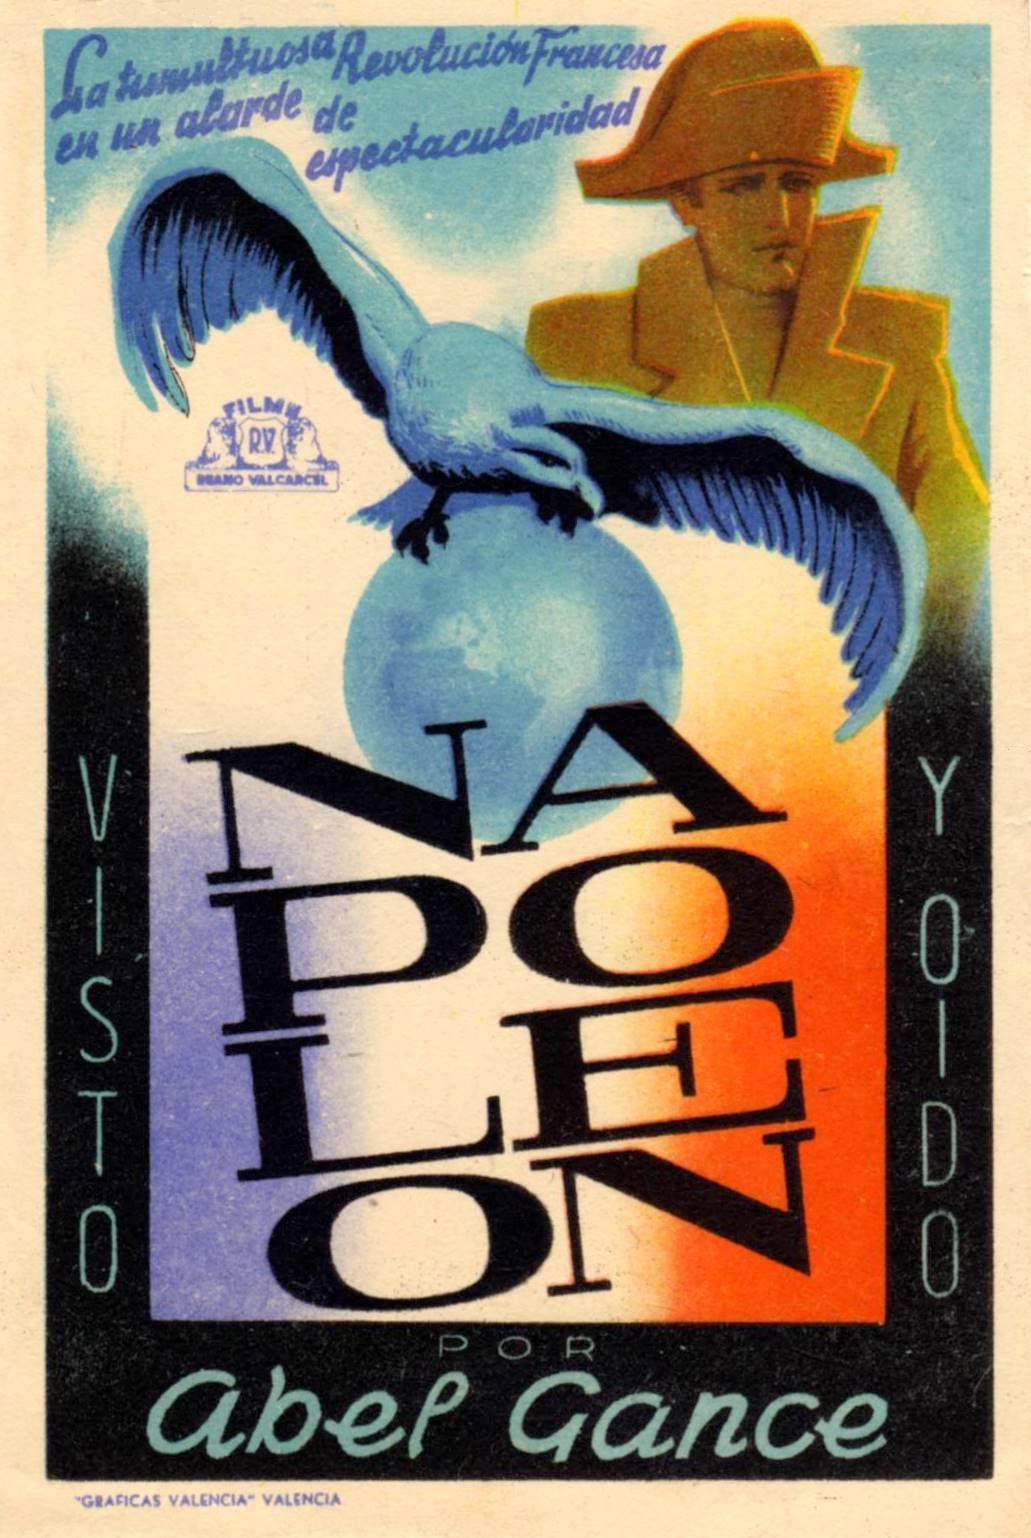 Постер фильма Наполеон | Napoleon